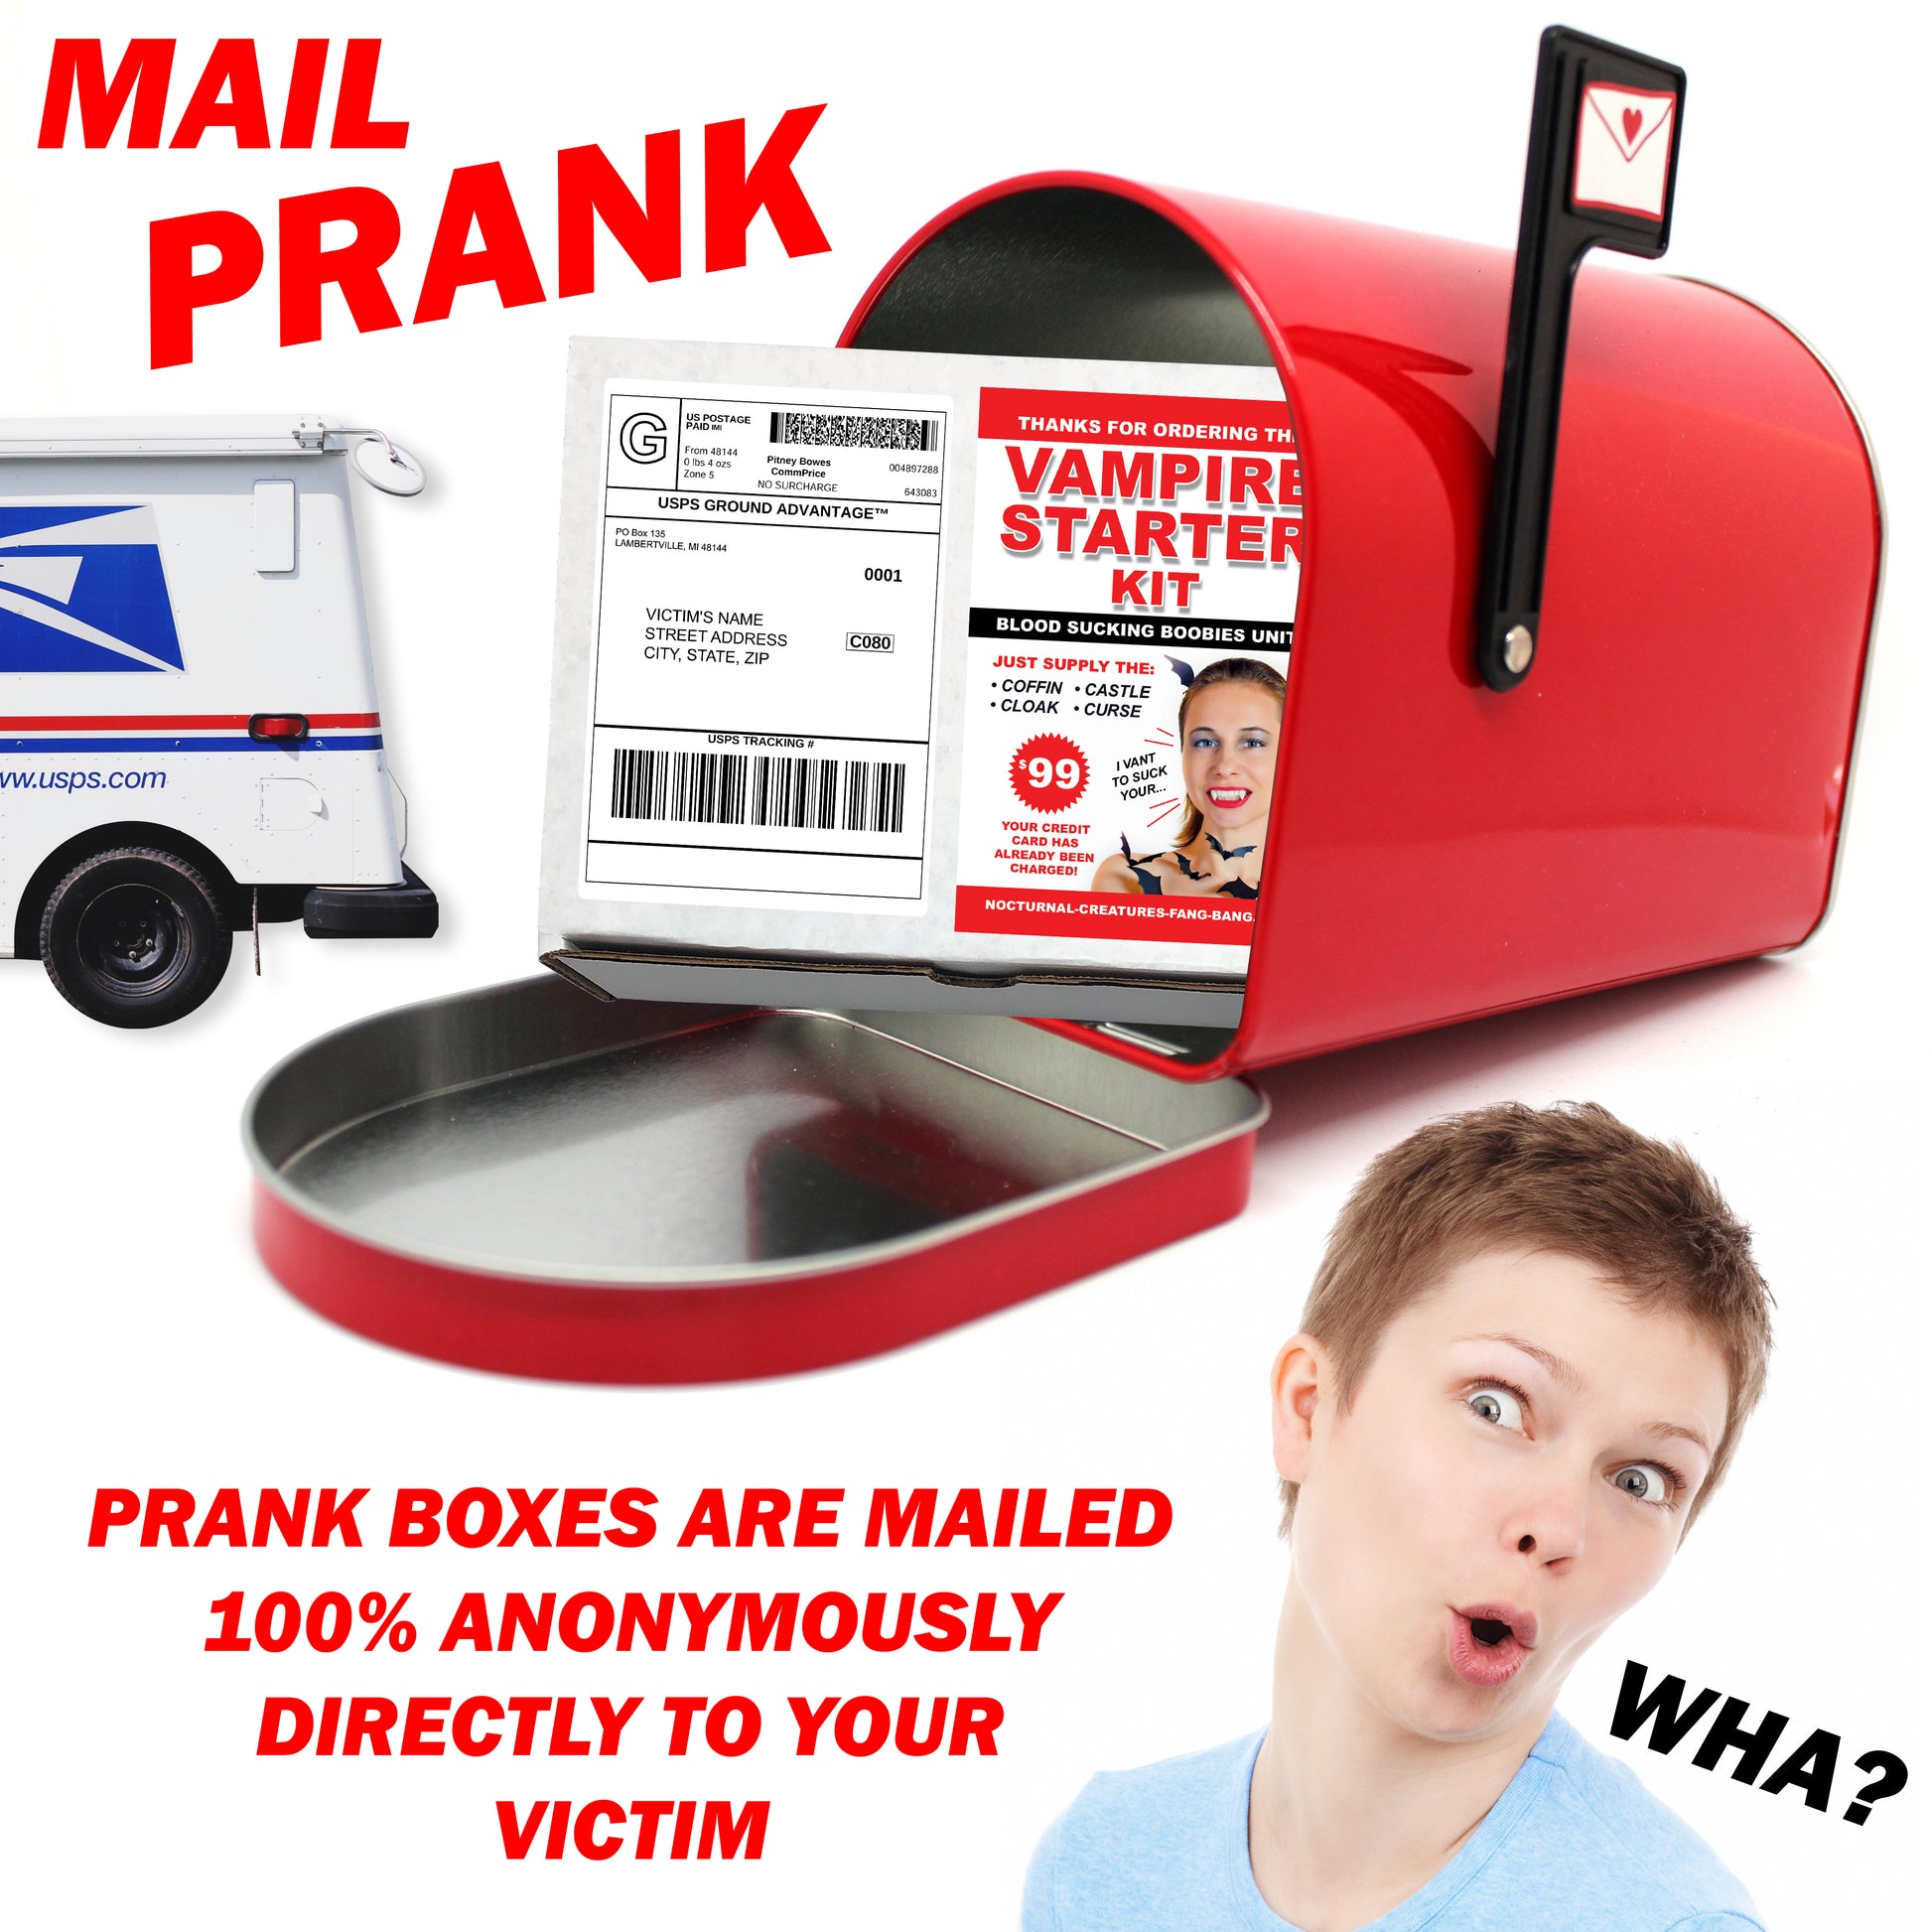 Vampire Starter Kit Prank to Mail